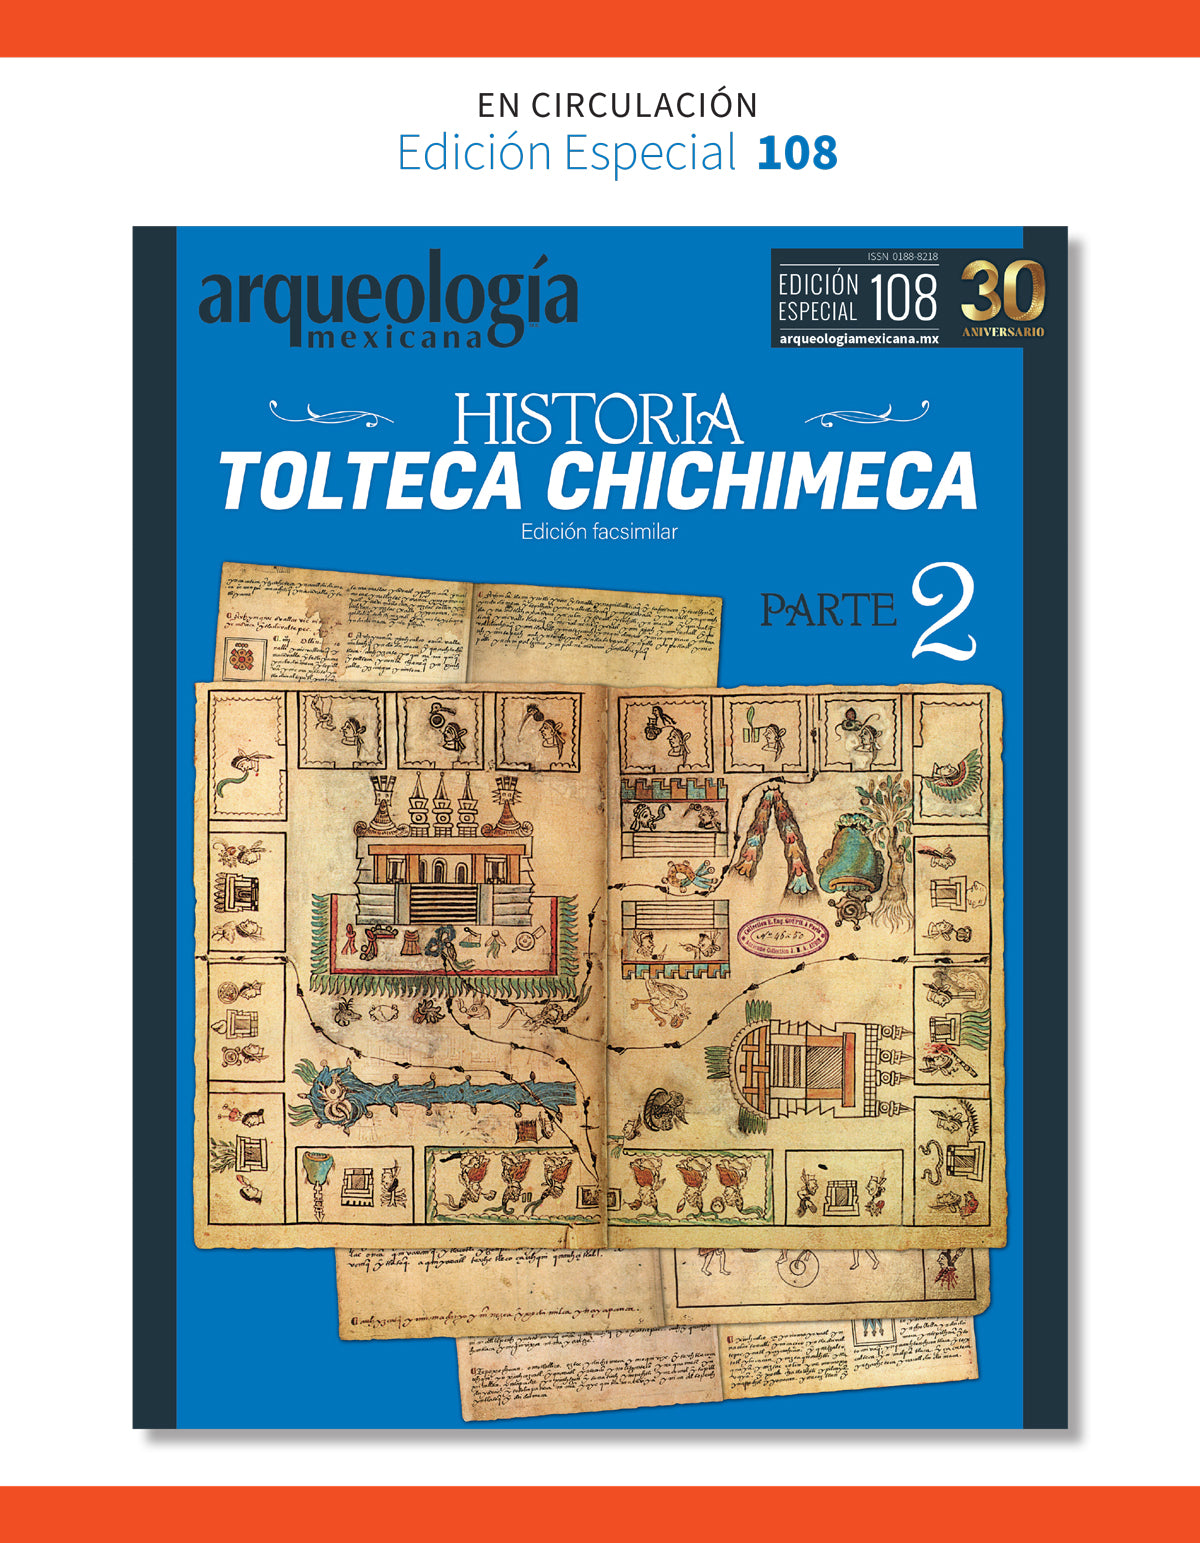 Historia Tolteca Chichimeca. Parte 3